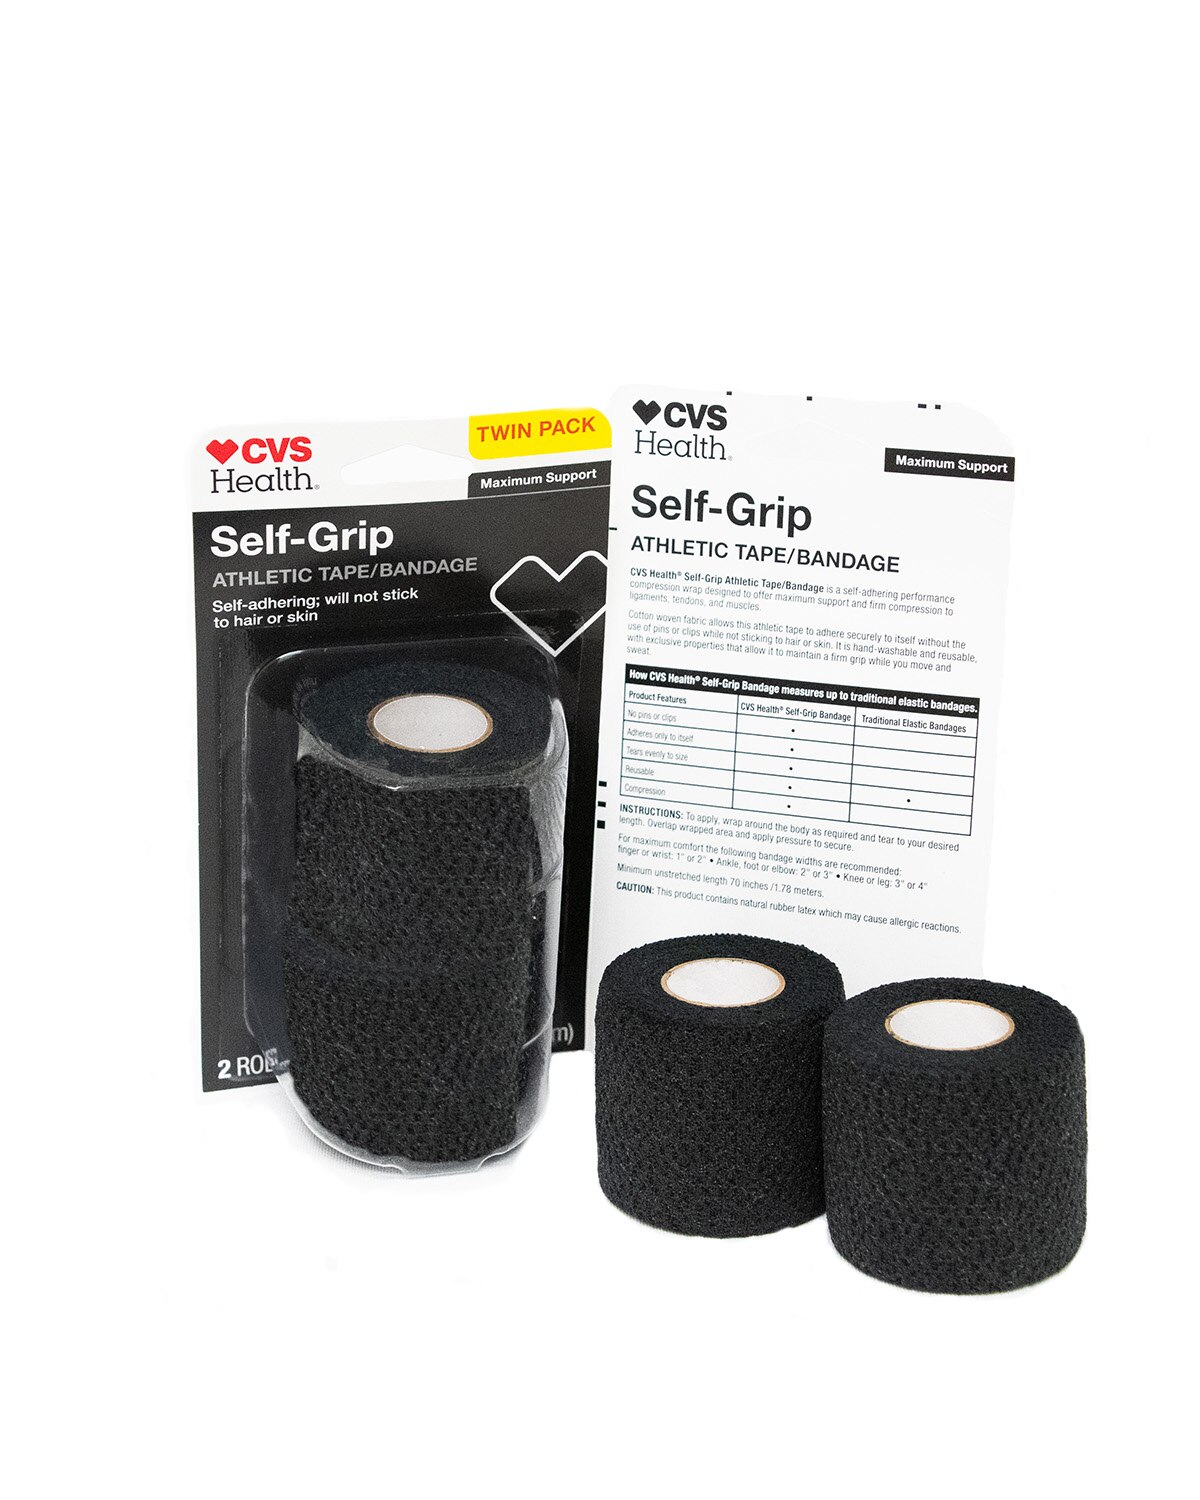 Customer Reviews: CVS Health Mepitac Soft Silicone Tape - CVS Pharmacy